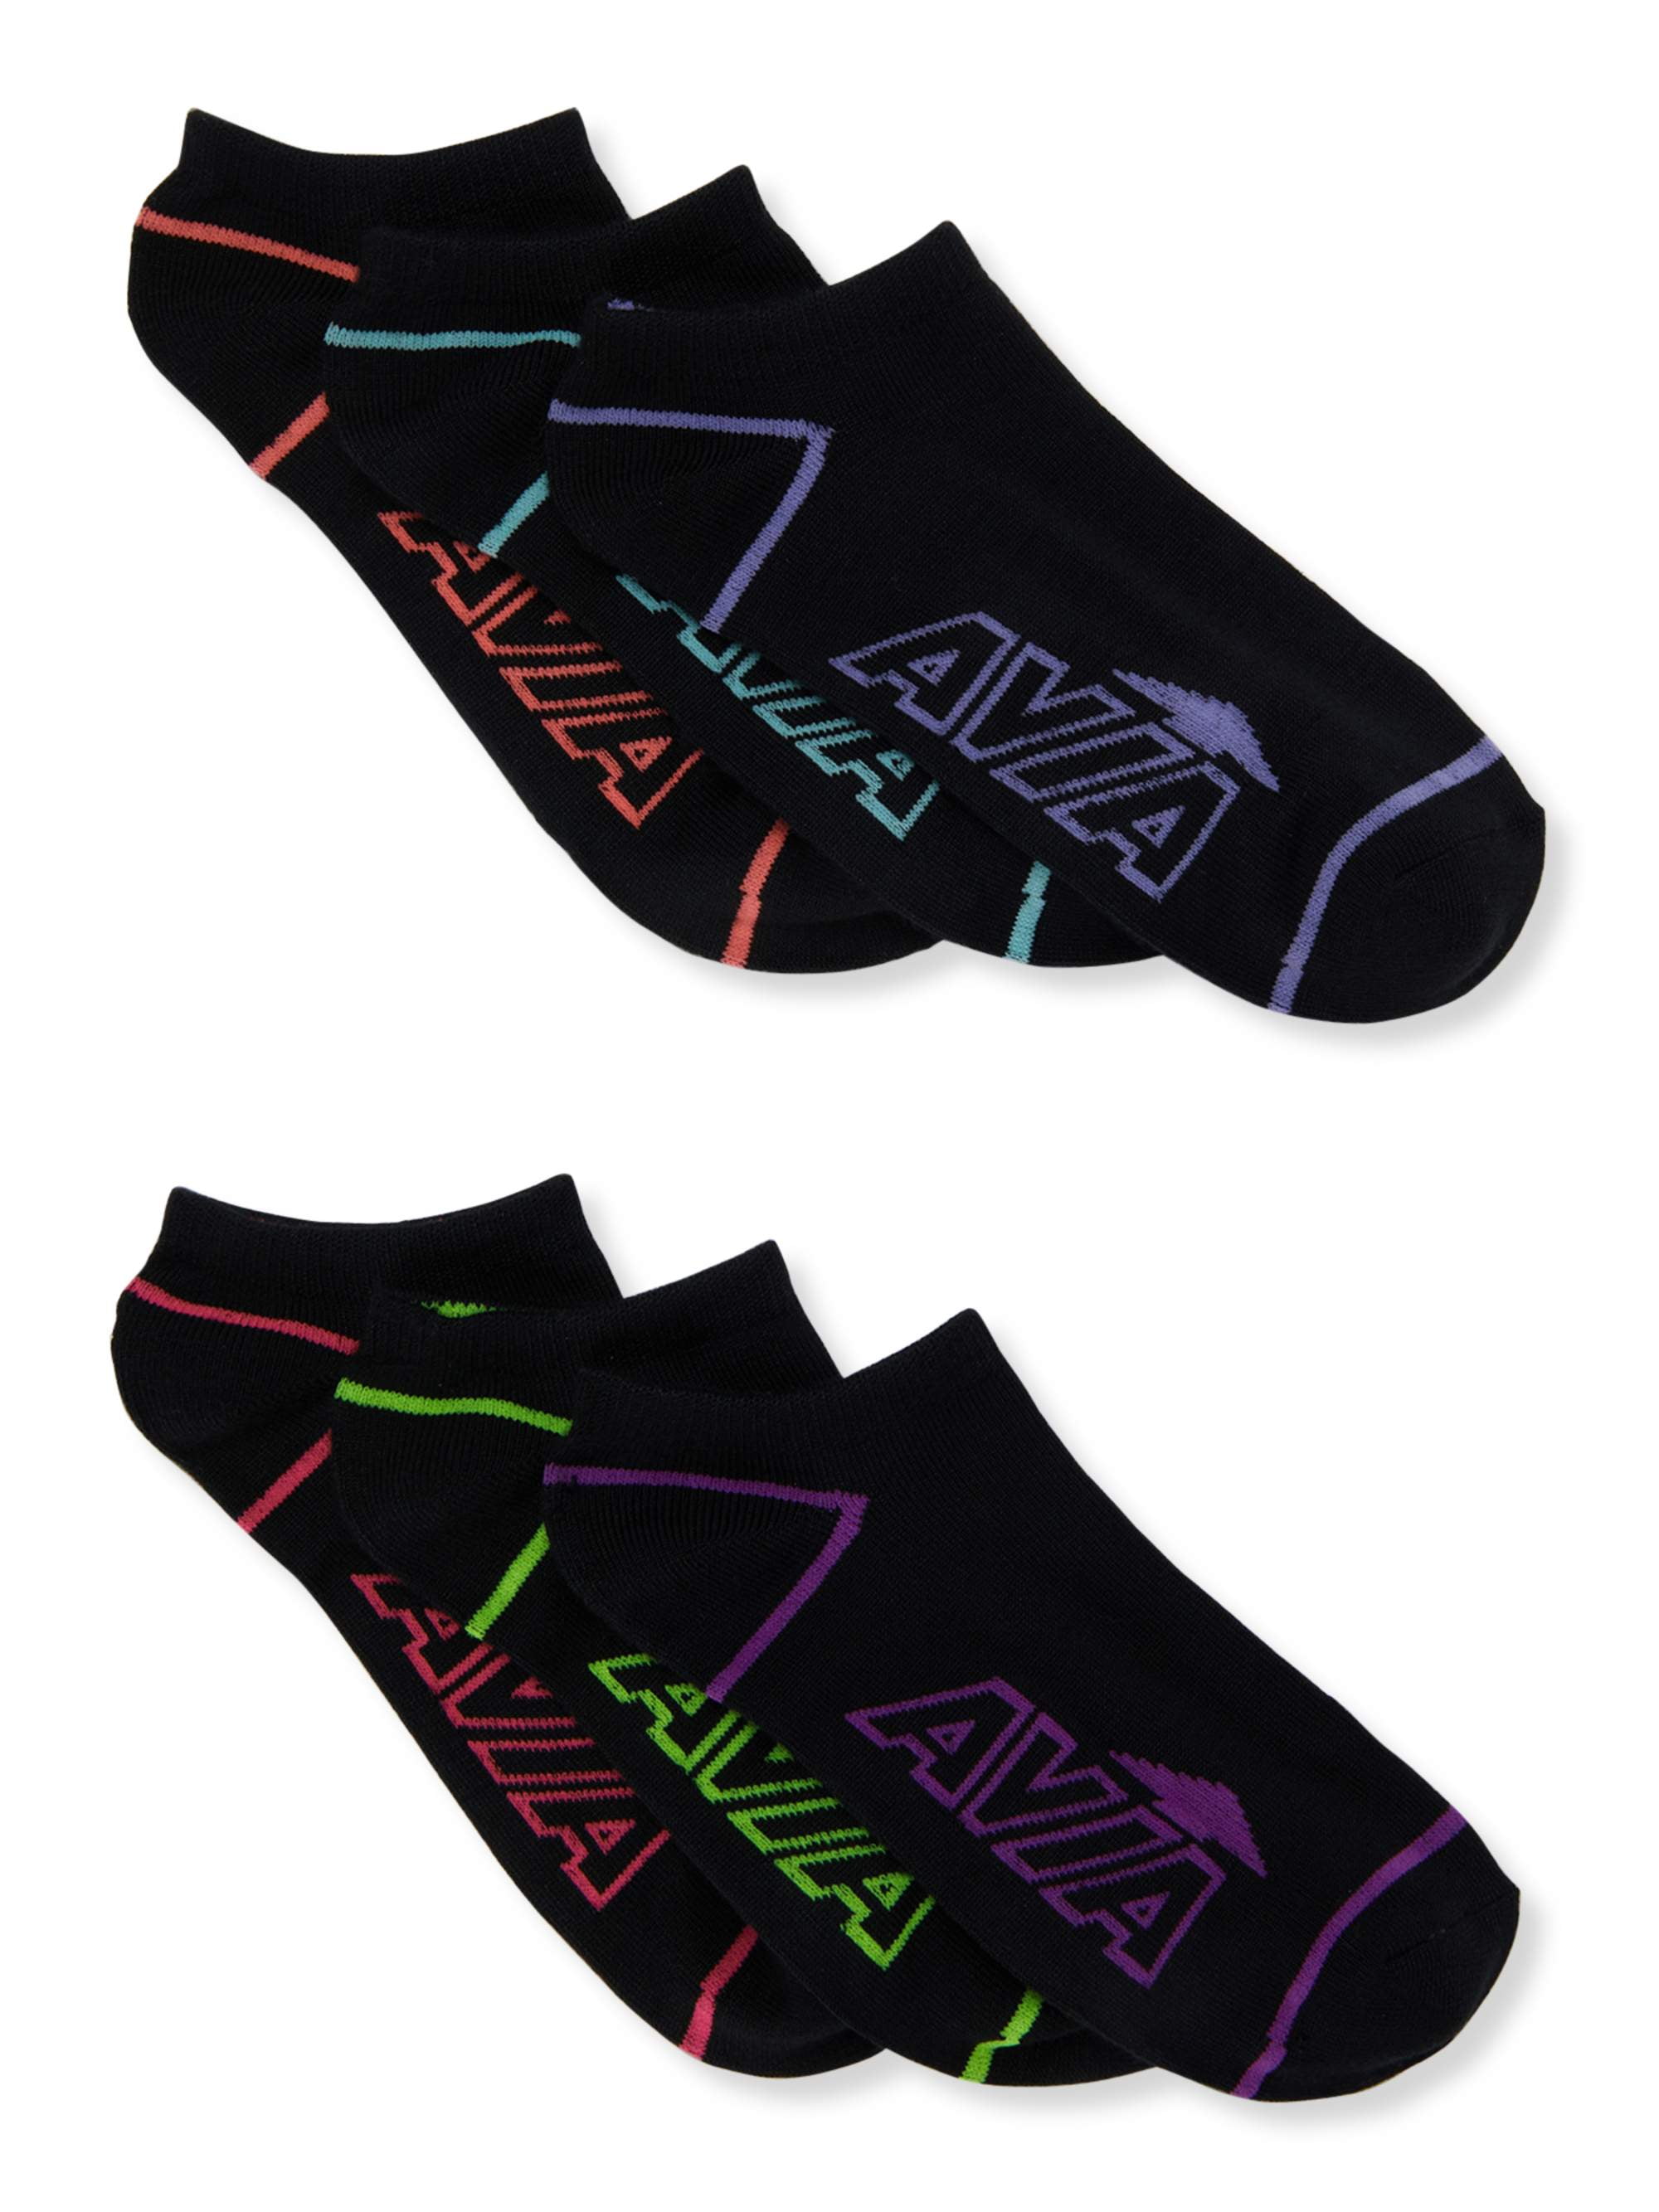 Avia Women'€™s Super Soft No Show Socks, 6 Pack 